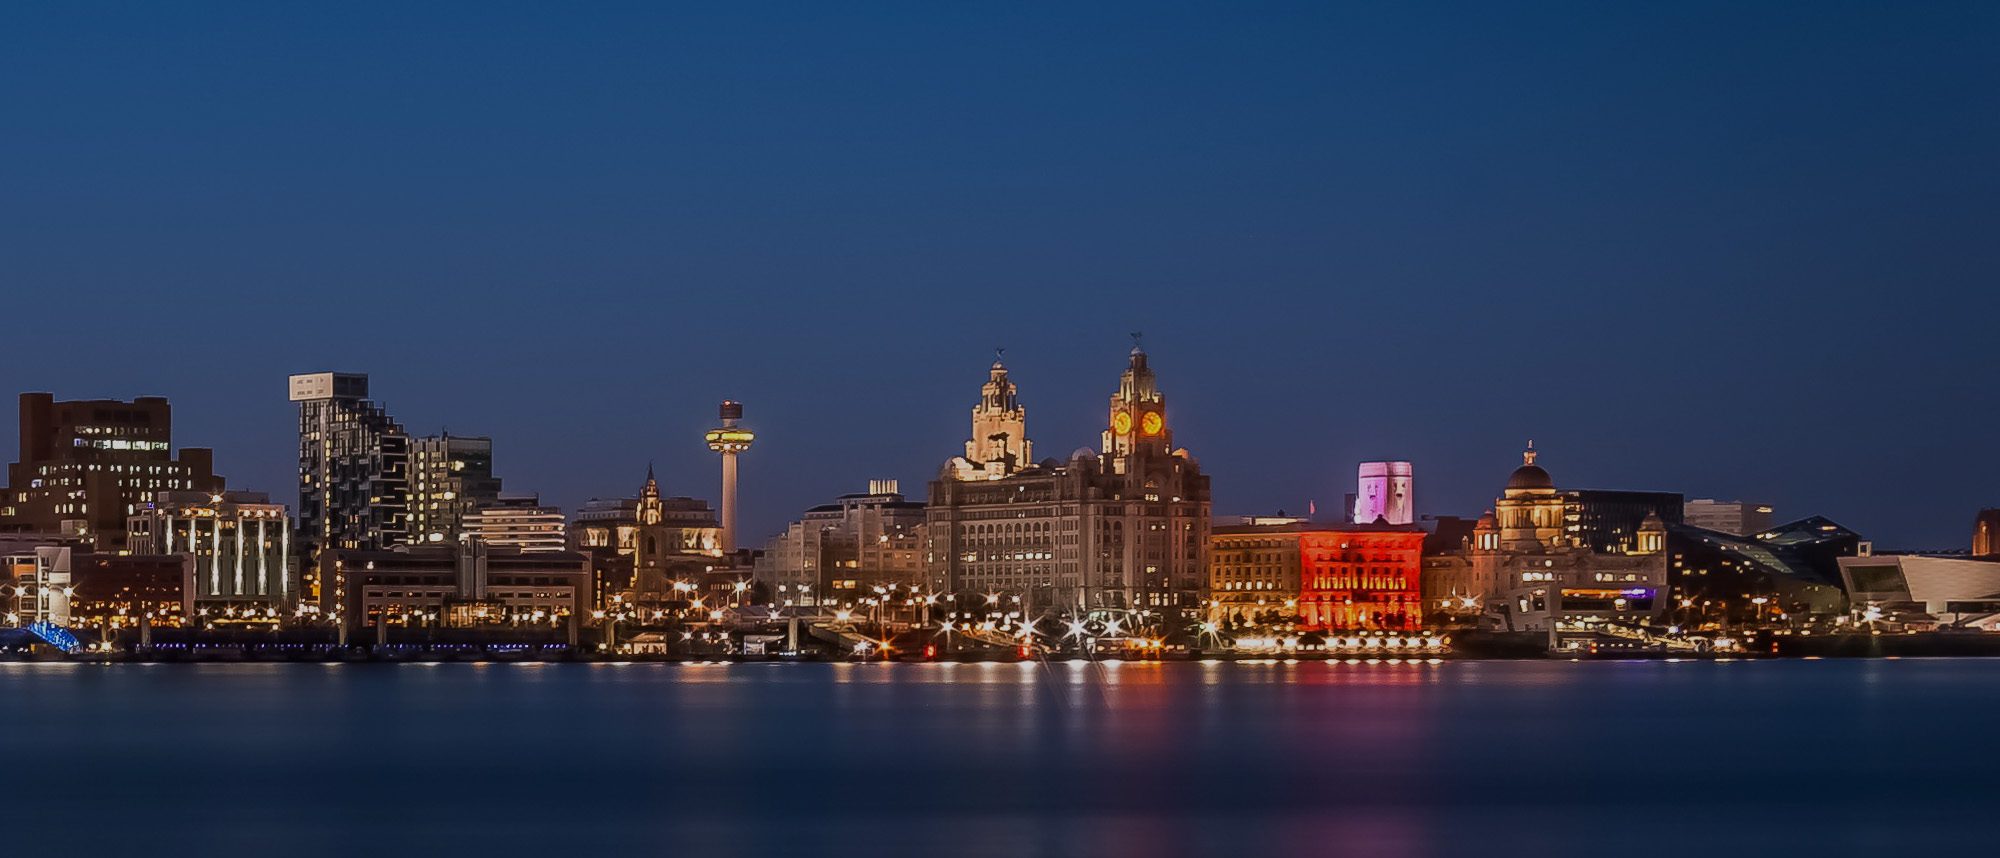 Liverpool European Capital Of Culture 2008